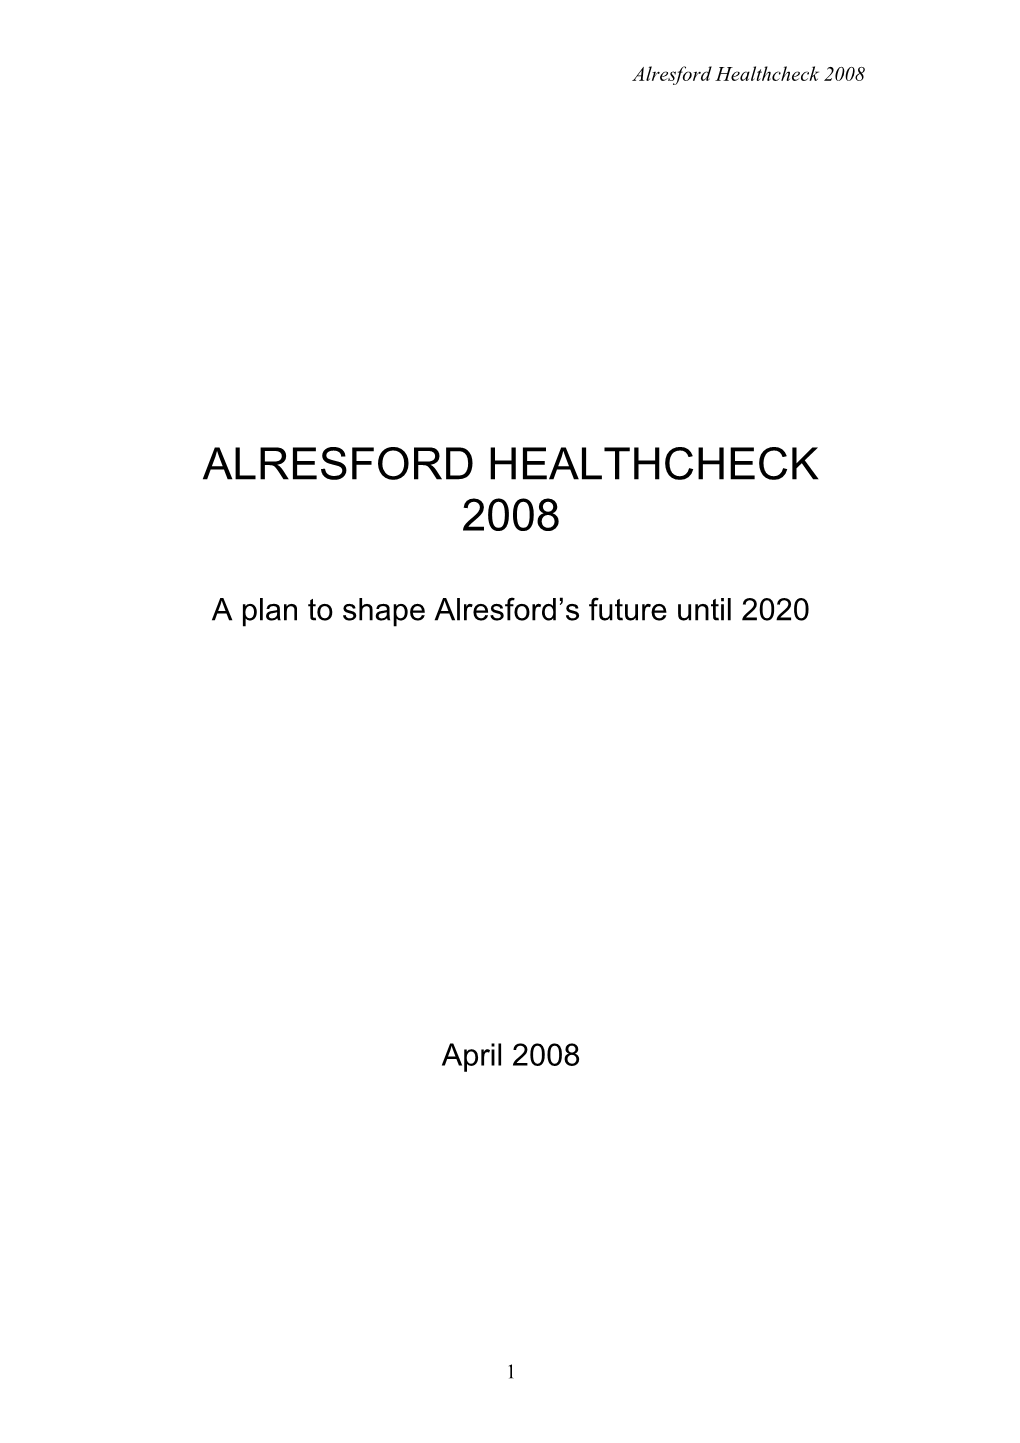 New Alresford Healthcheck 2020